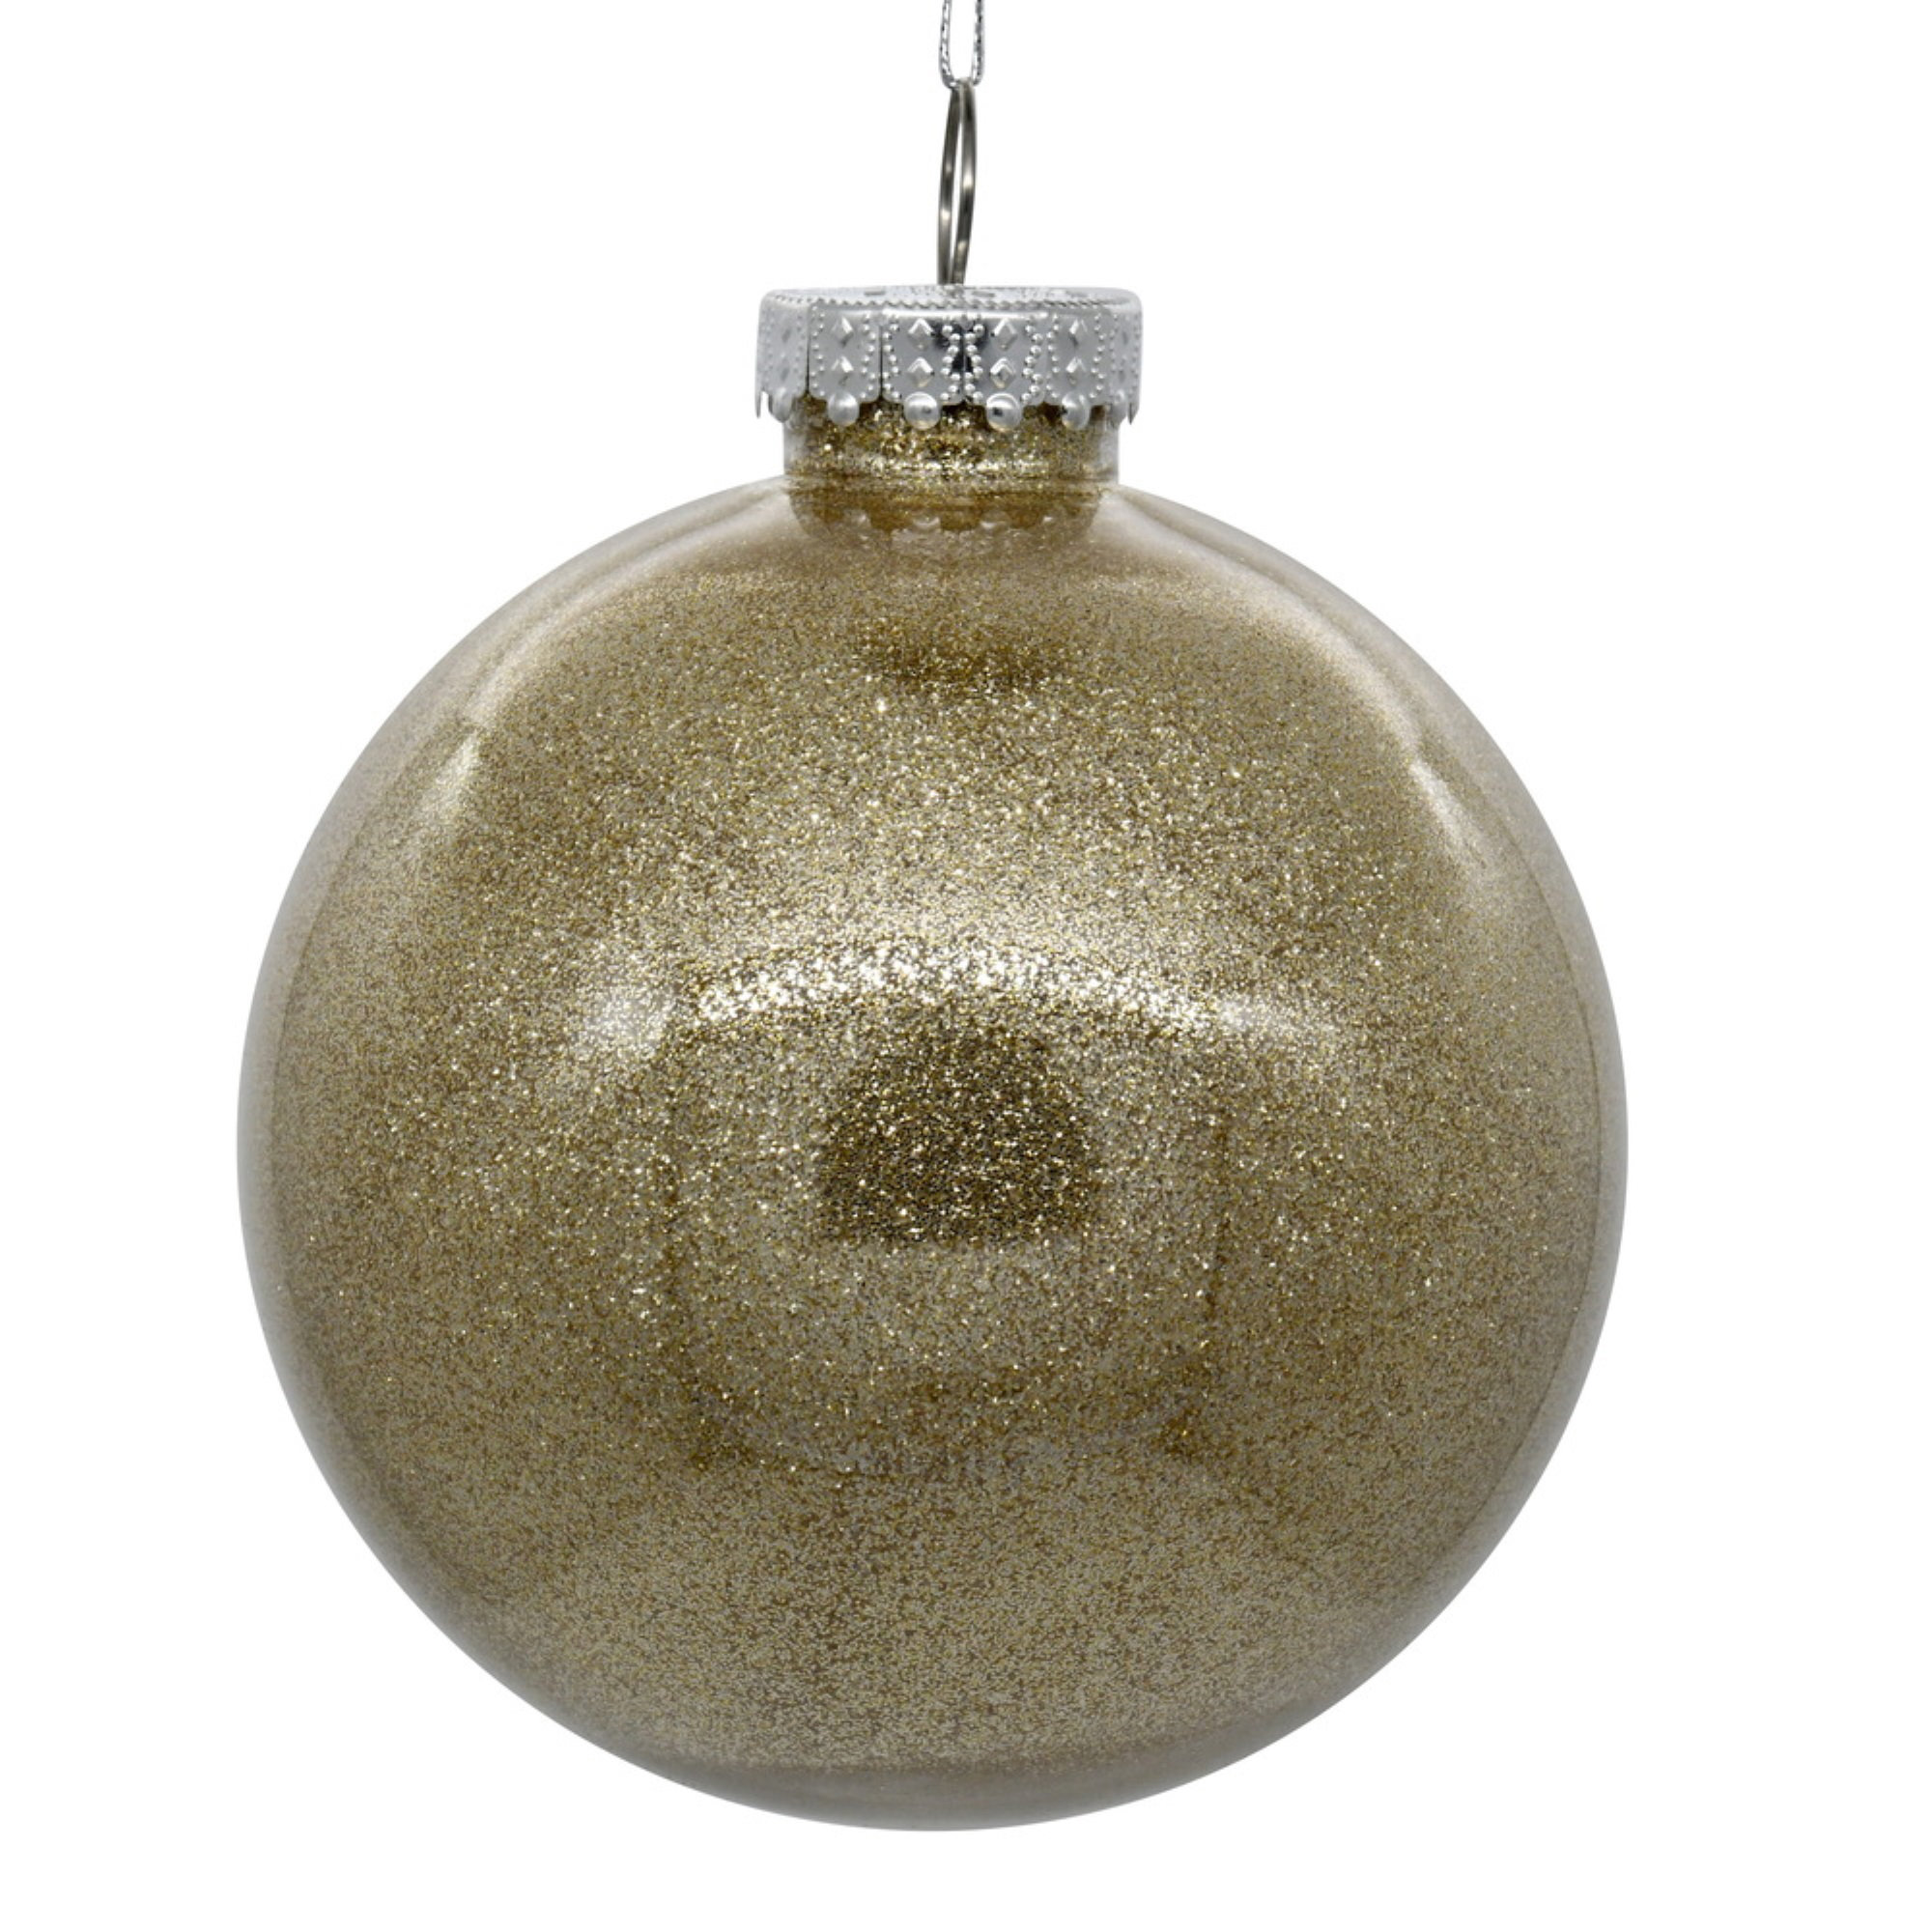 Clear Ornament with Glitter Interior